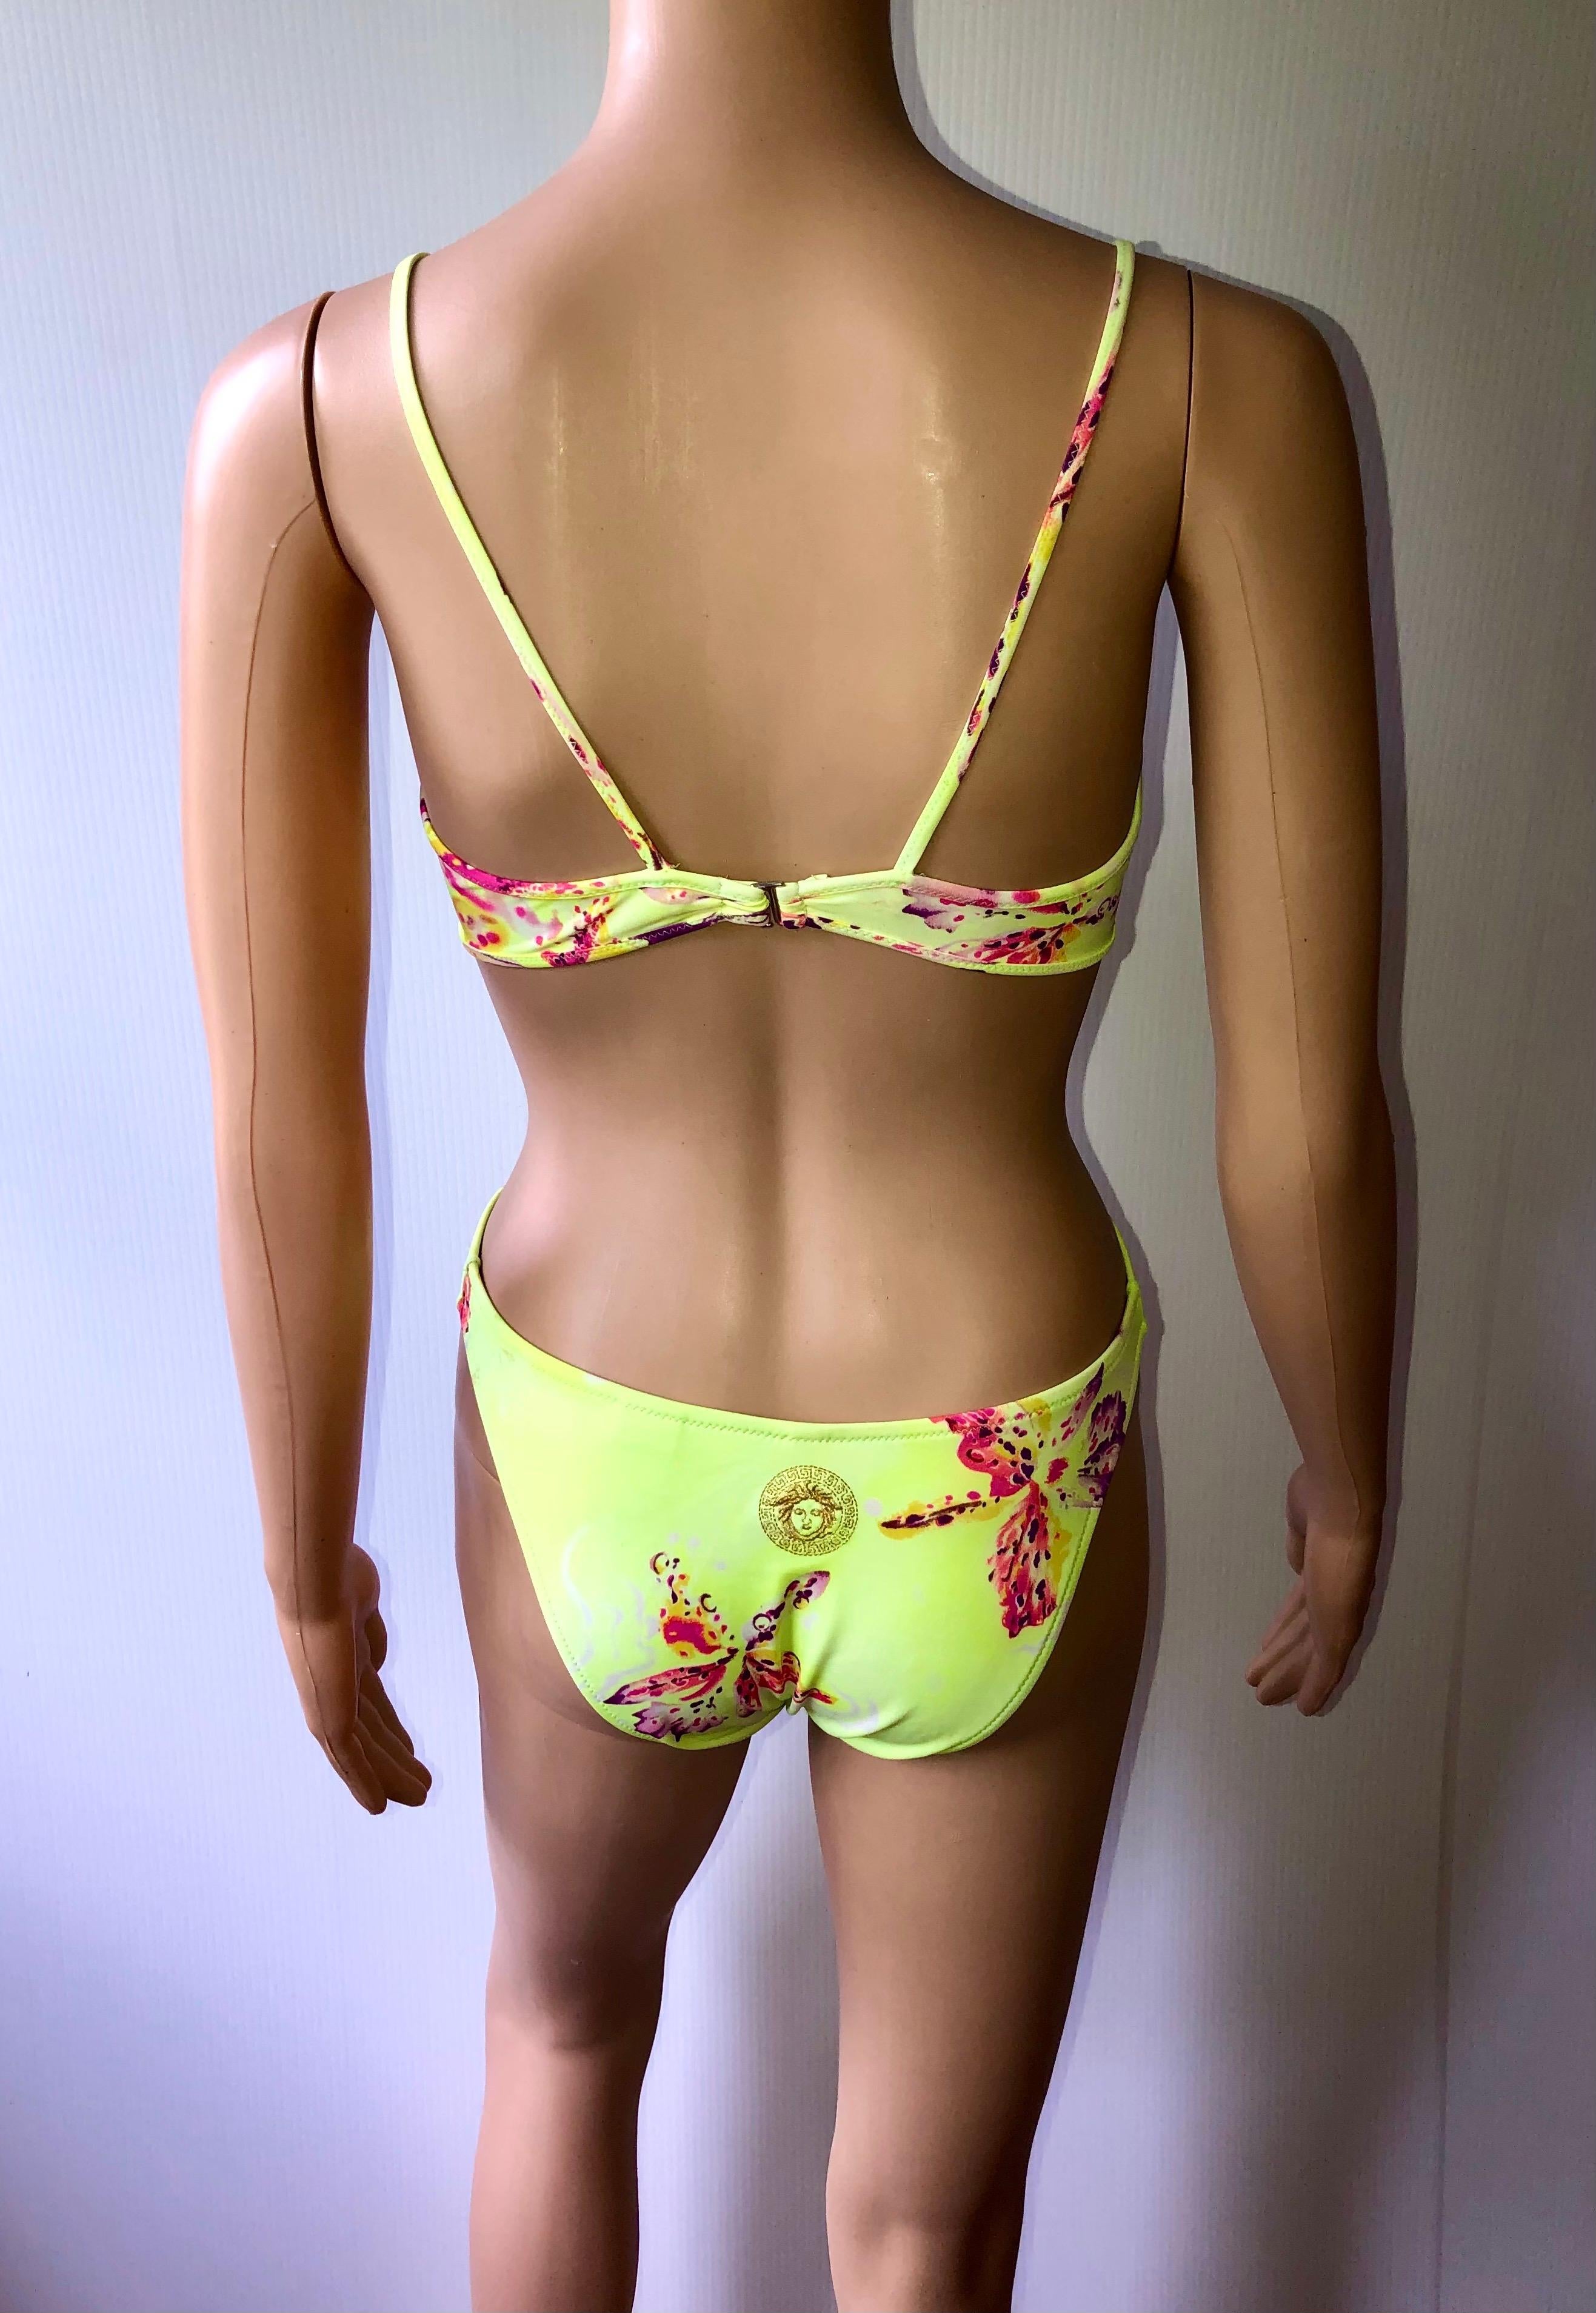 Green Gianni Versace S/S 2000 Orchid Neon Two-Piece Bikini Set Swimsuit Swimwear  For Sale